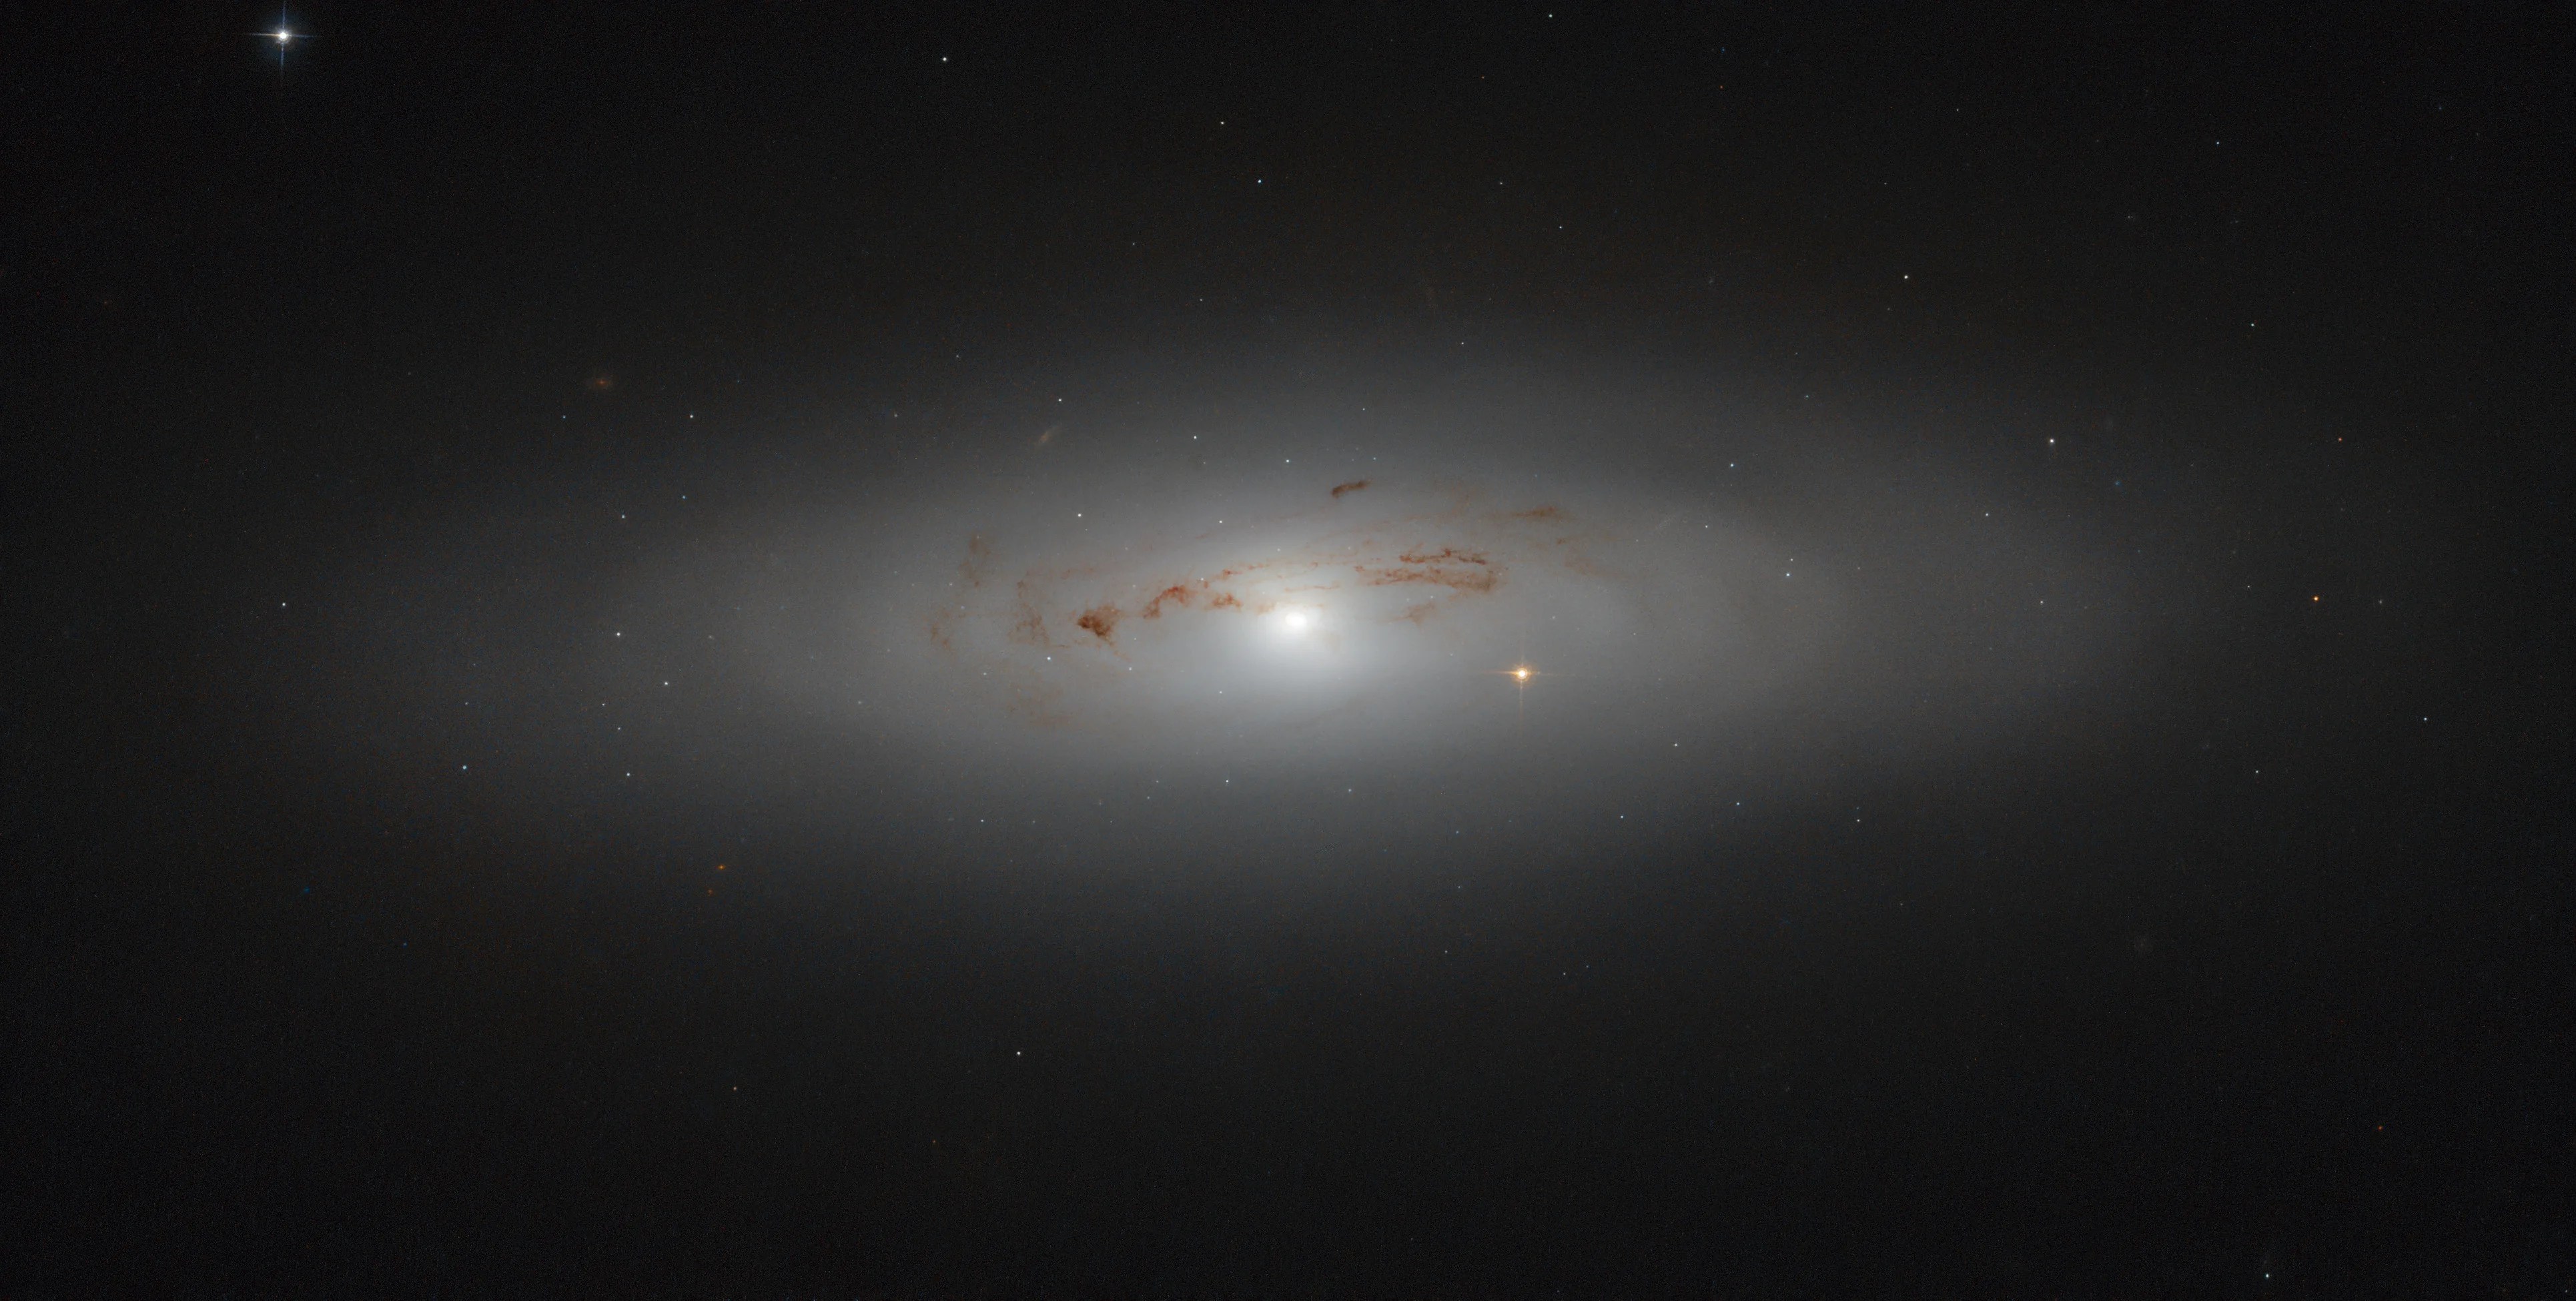 Hazy galaxy with dusty streaks in the center